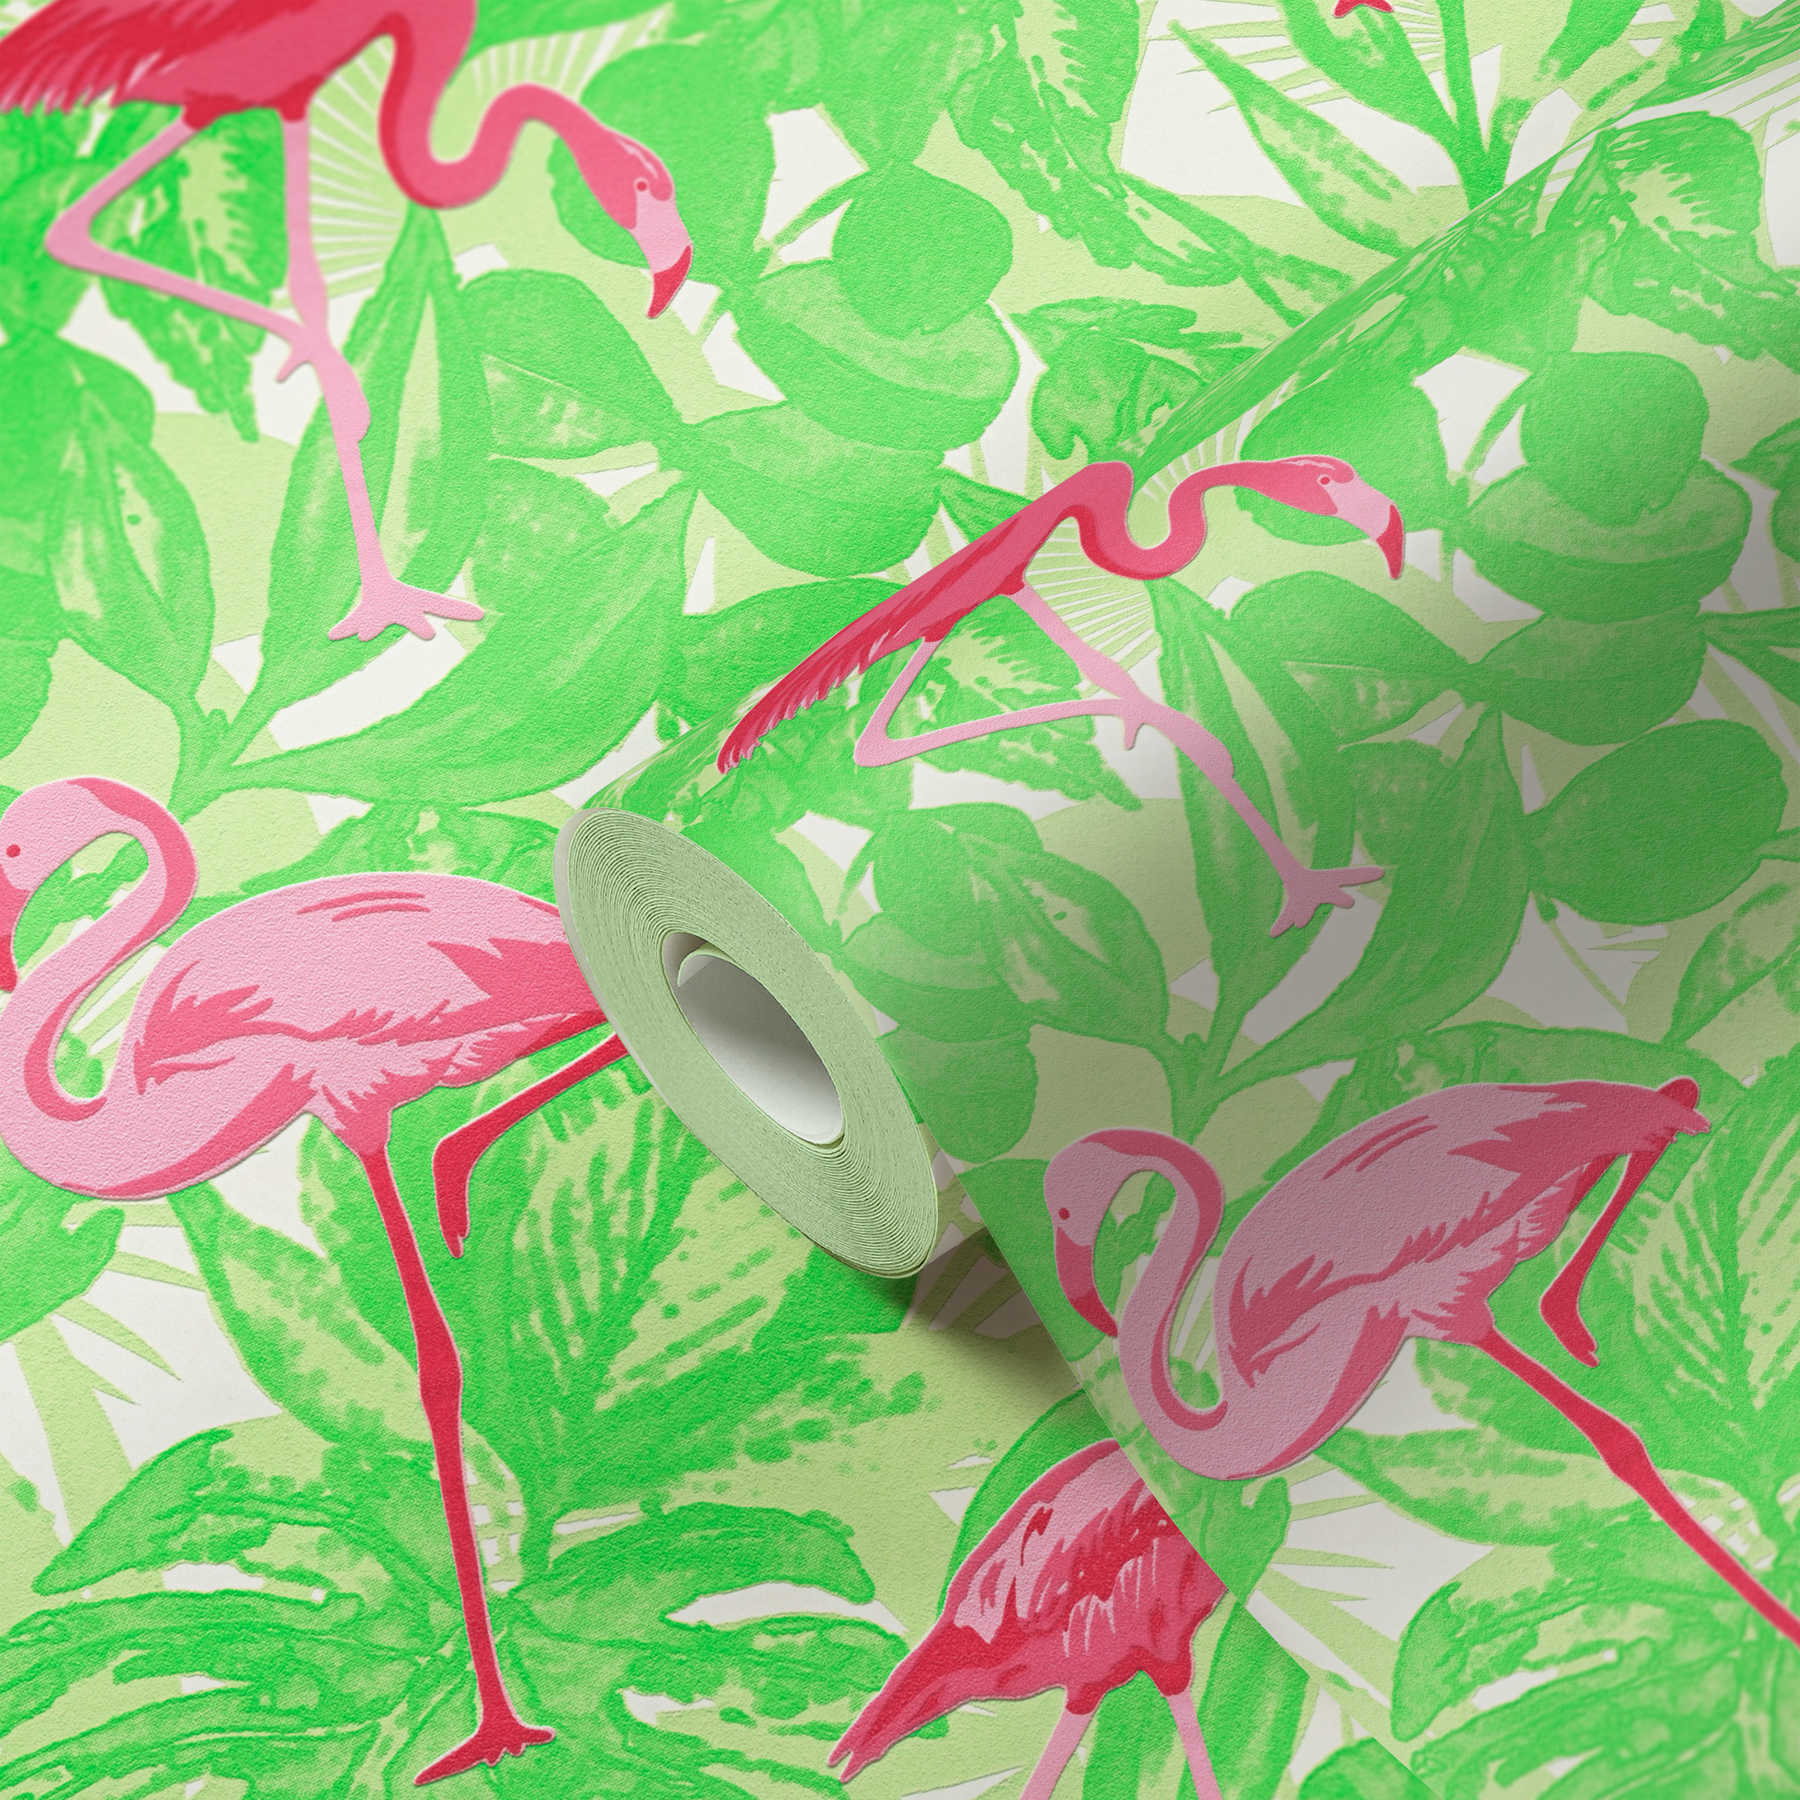             Papier peint tropical avec flamant rose & feuilles - rose, vert
        